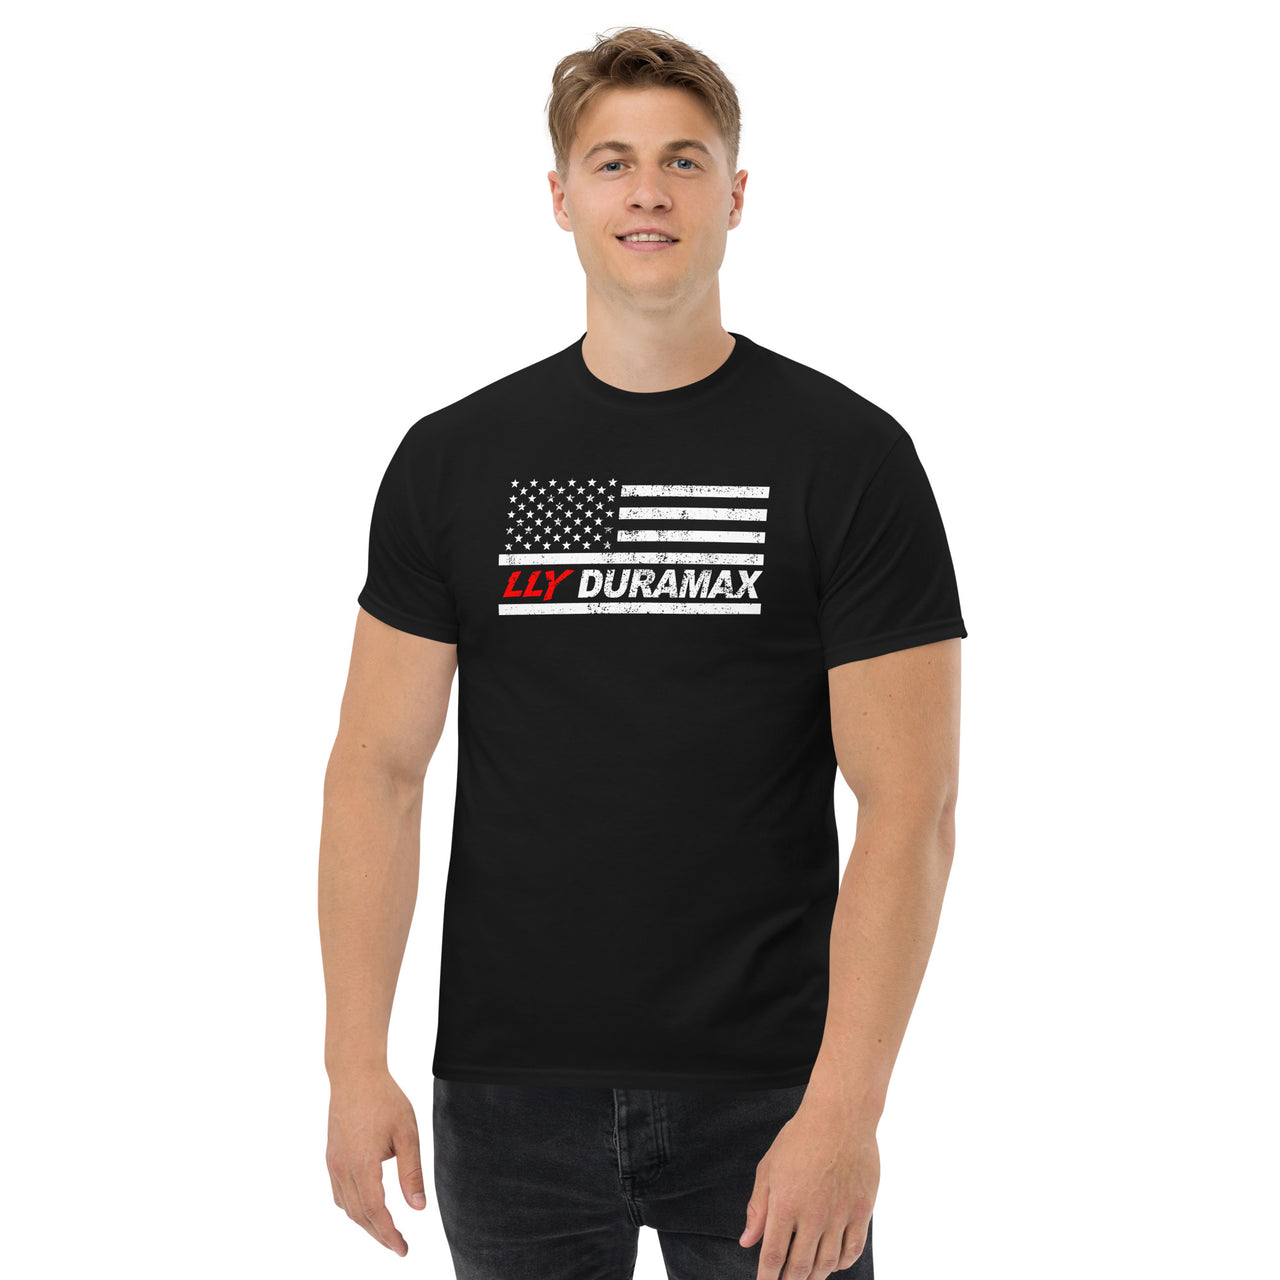 LLY American Flag Duramax T-Shirt modeled in black